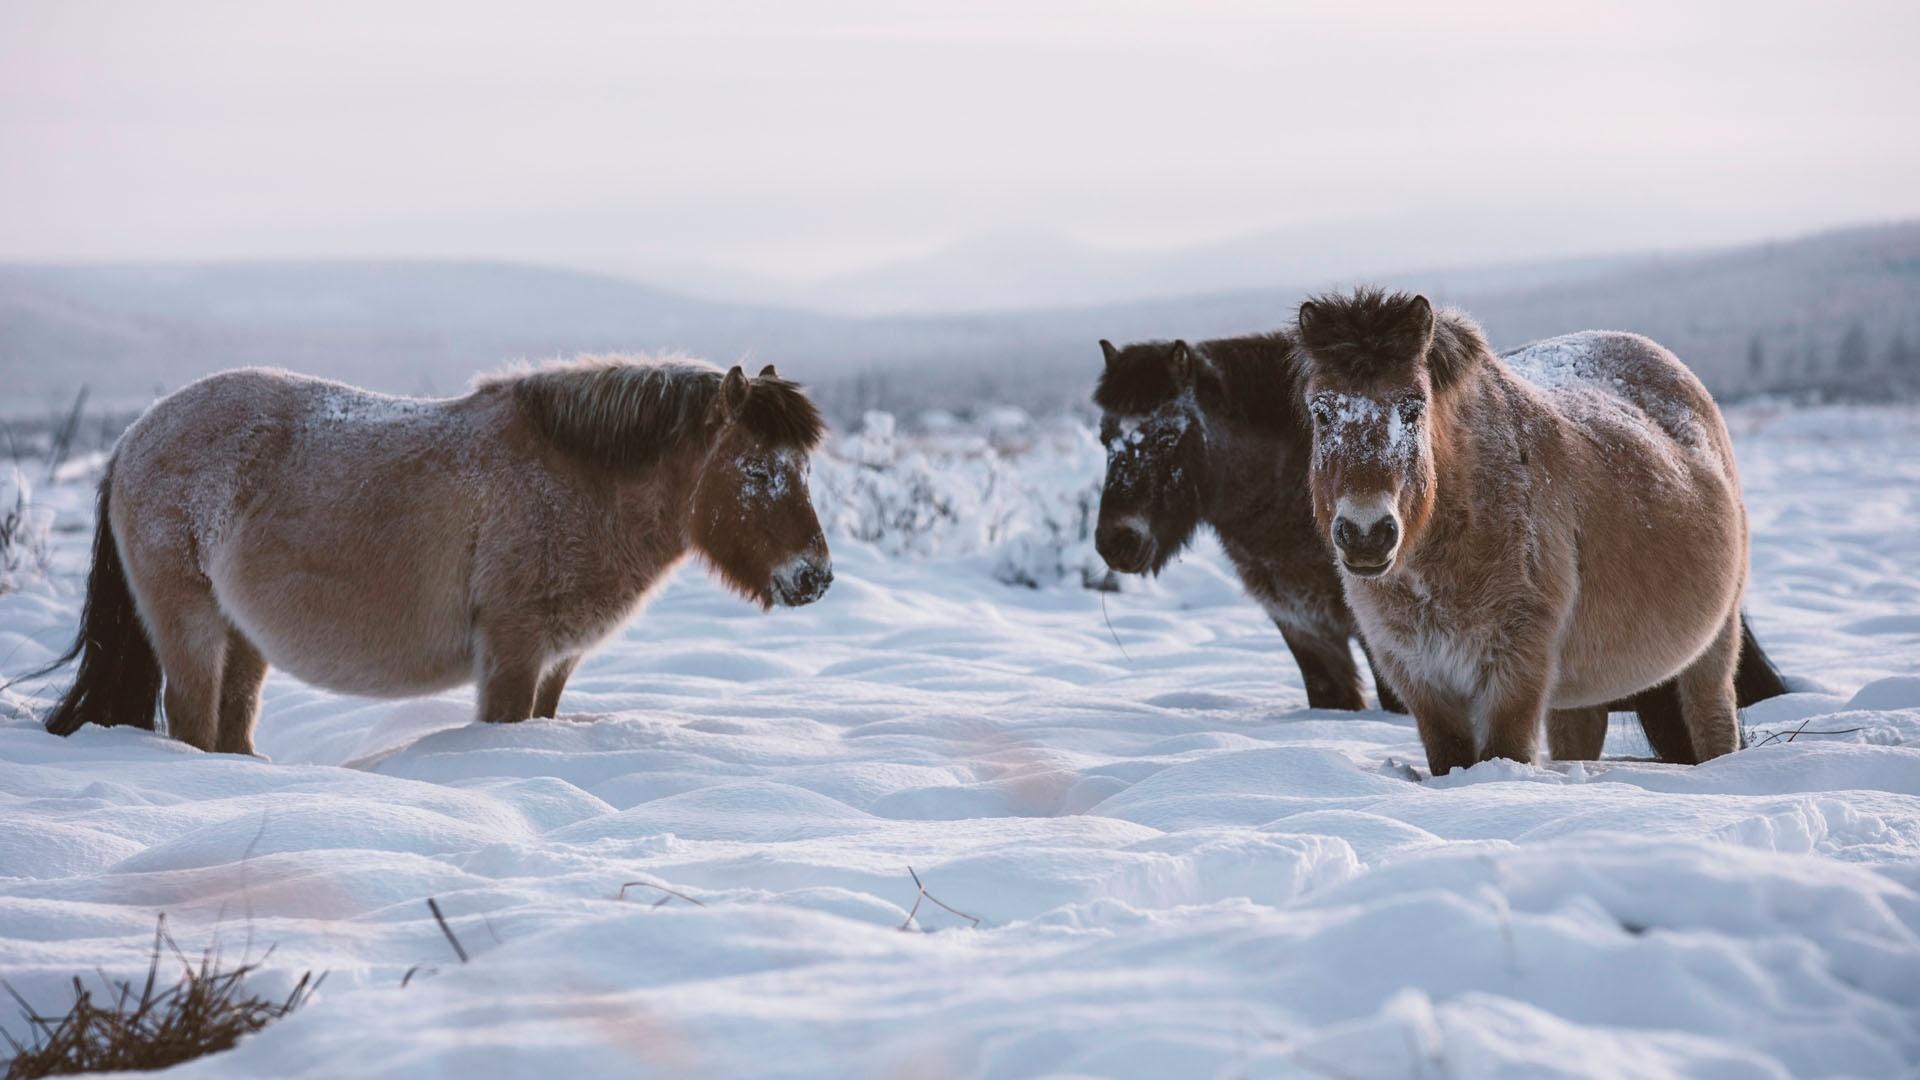 Horses in the snow, Majestic animals, Winter wonderland, Serene landscapes, 1920x1080 Full HD Desktop